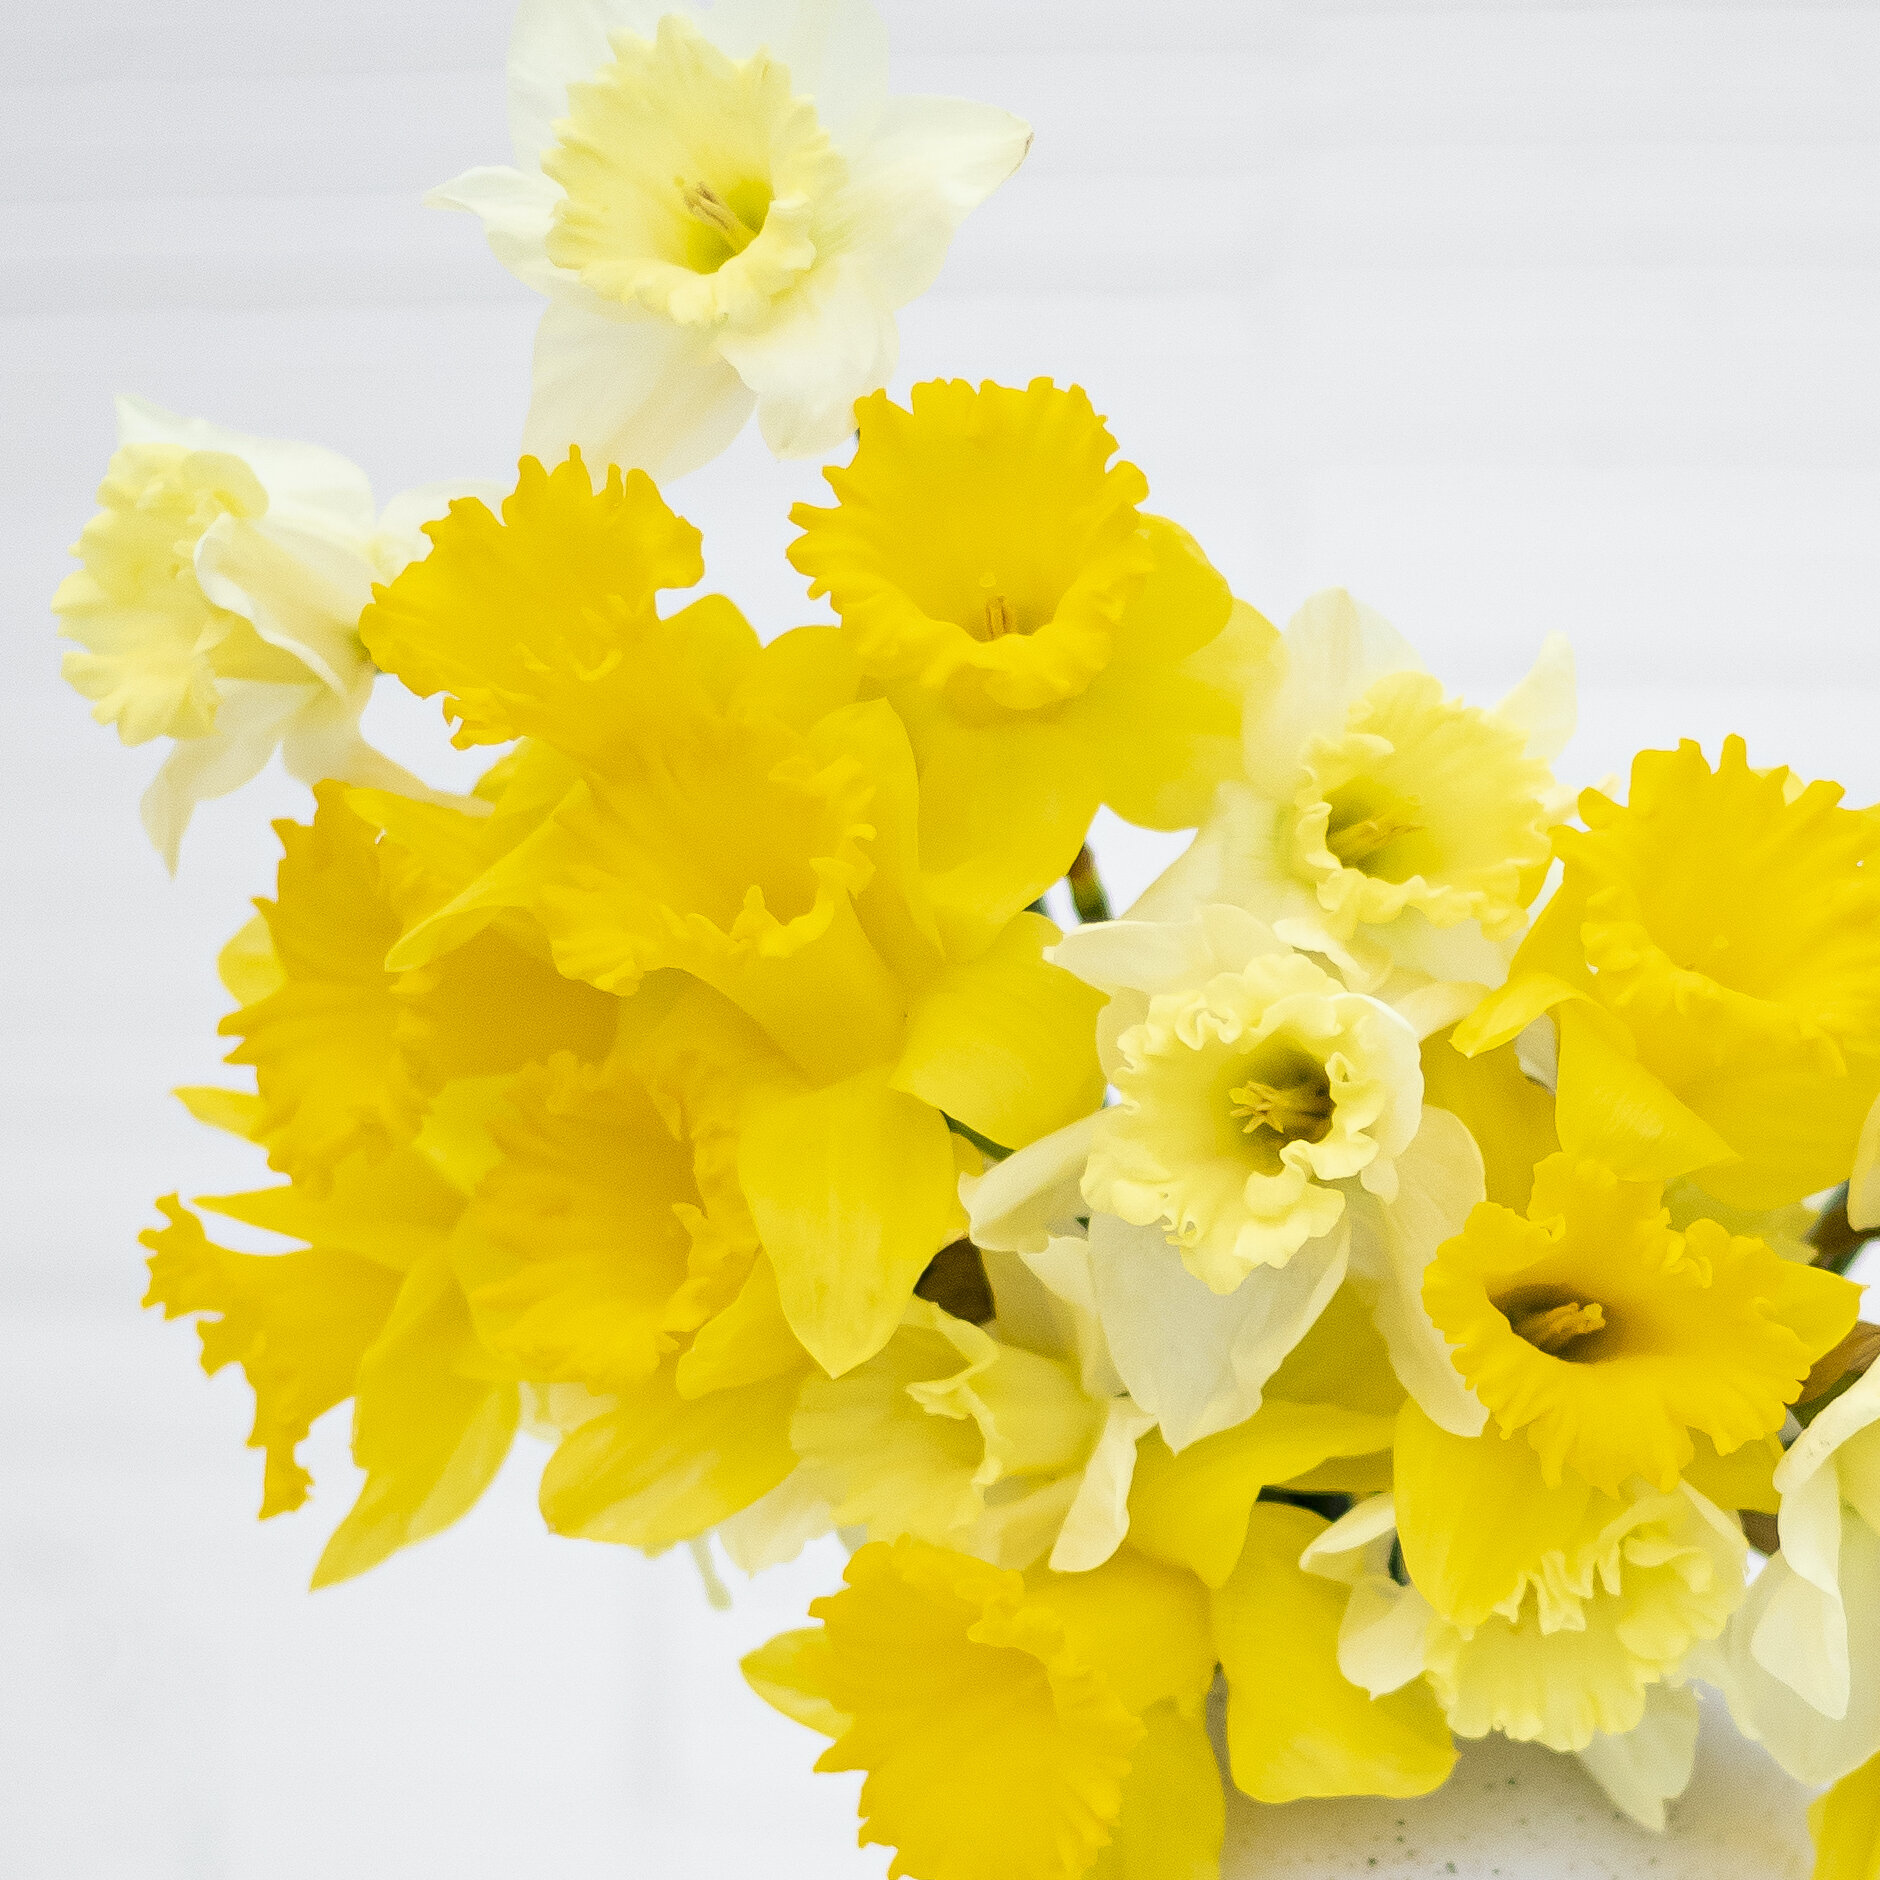 Daffodil Flower Care